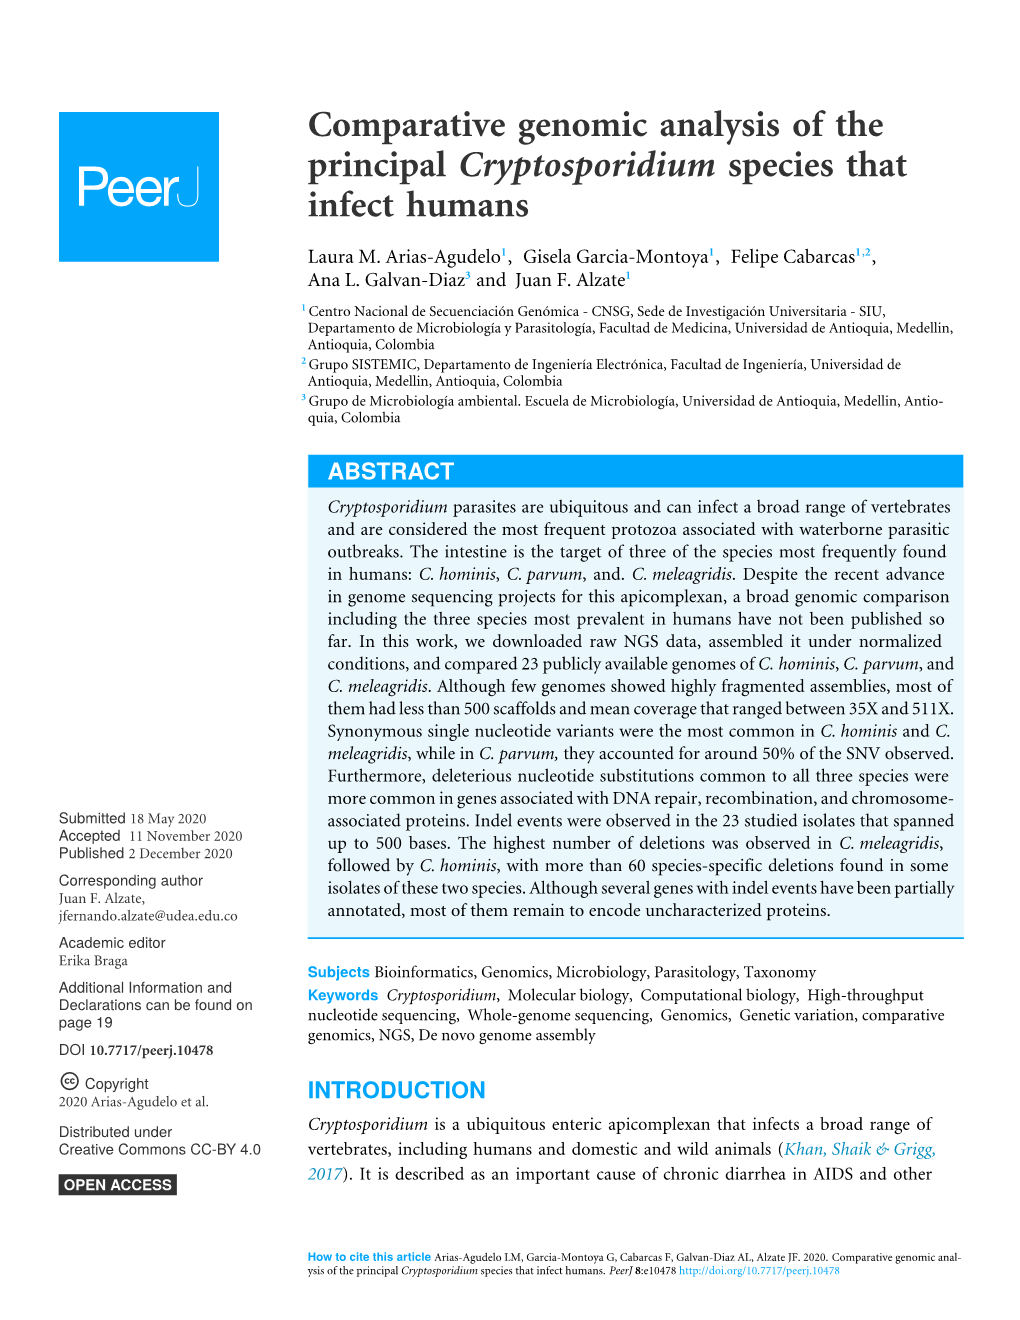 Comparative Genomic Analysis of the Principal Cryptosporidium Species That Infect Humans